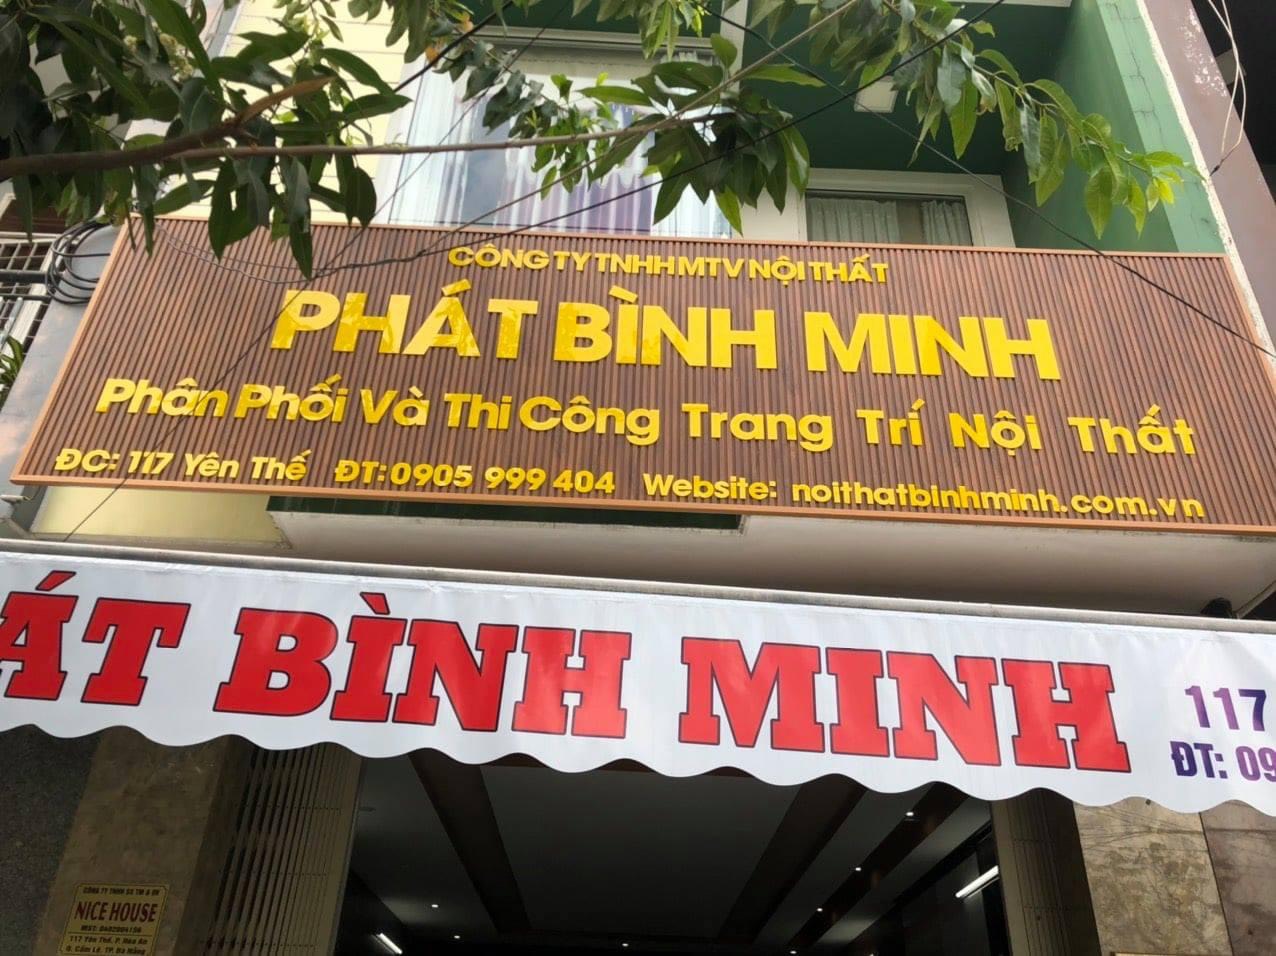 phatbinhminh-117-yenthe